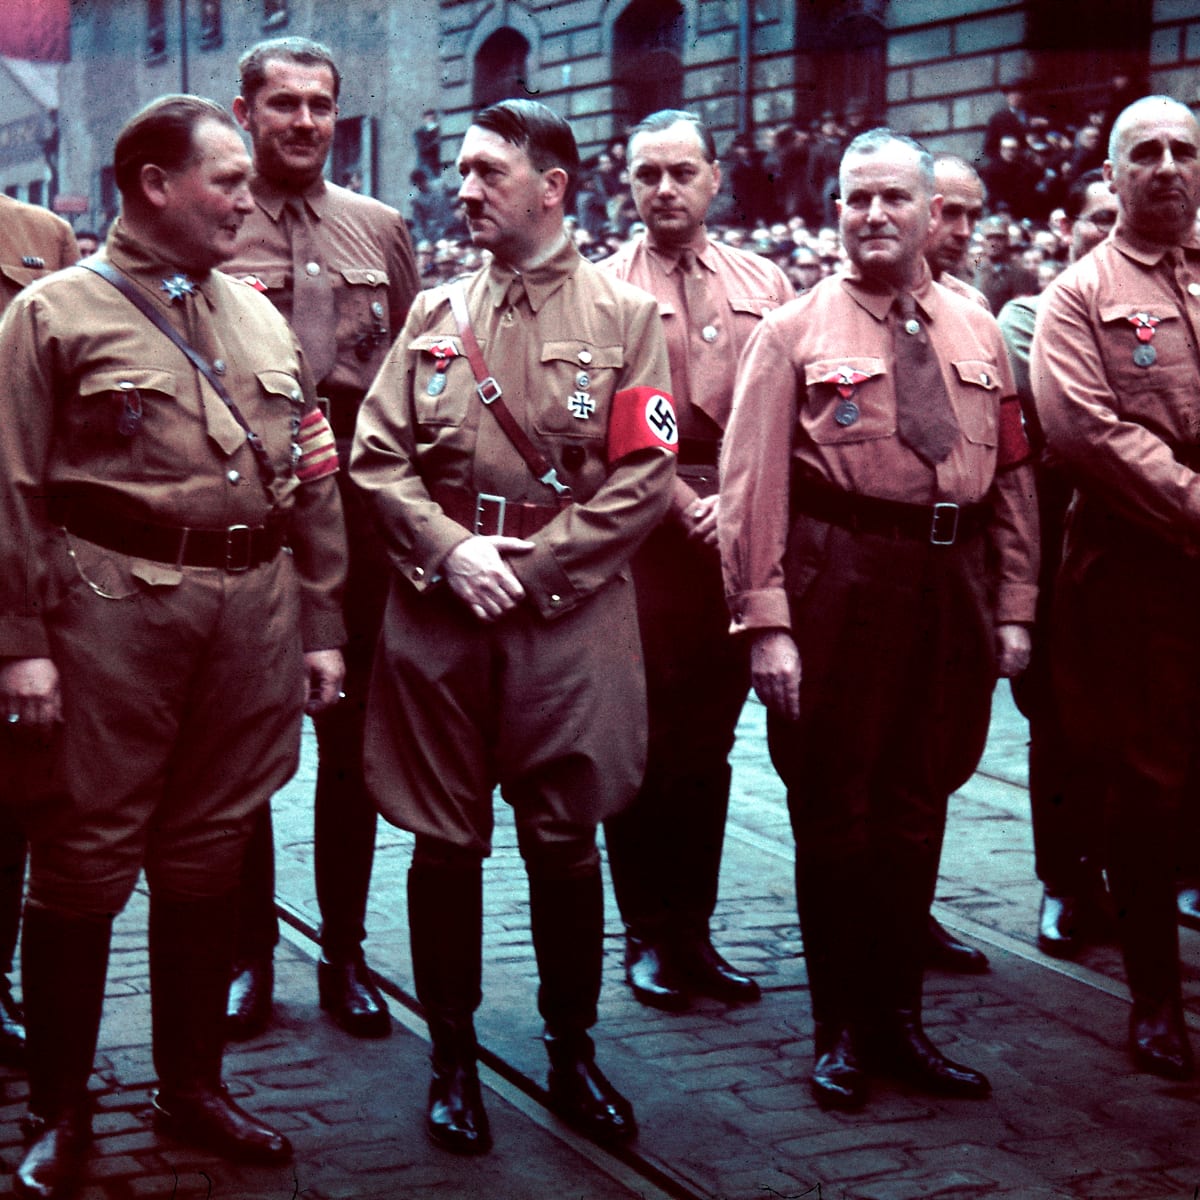 Putsch de Múnich, el golpe de estado de Hitler